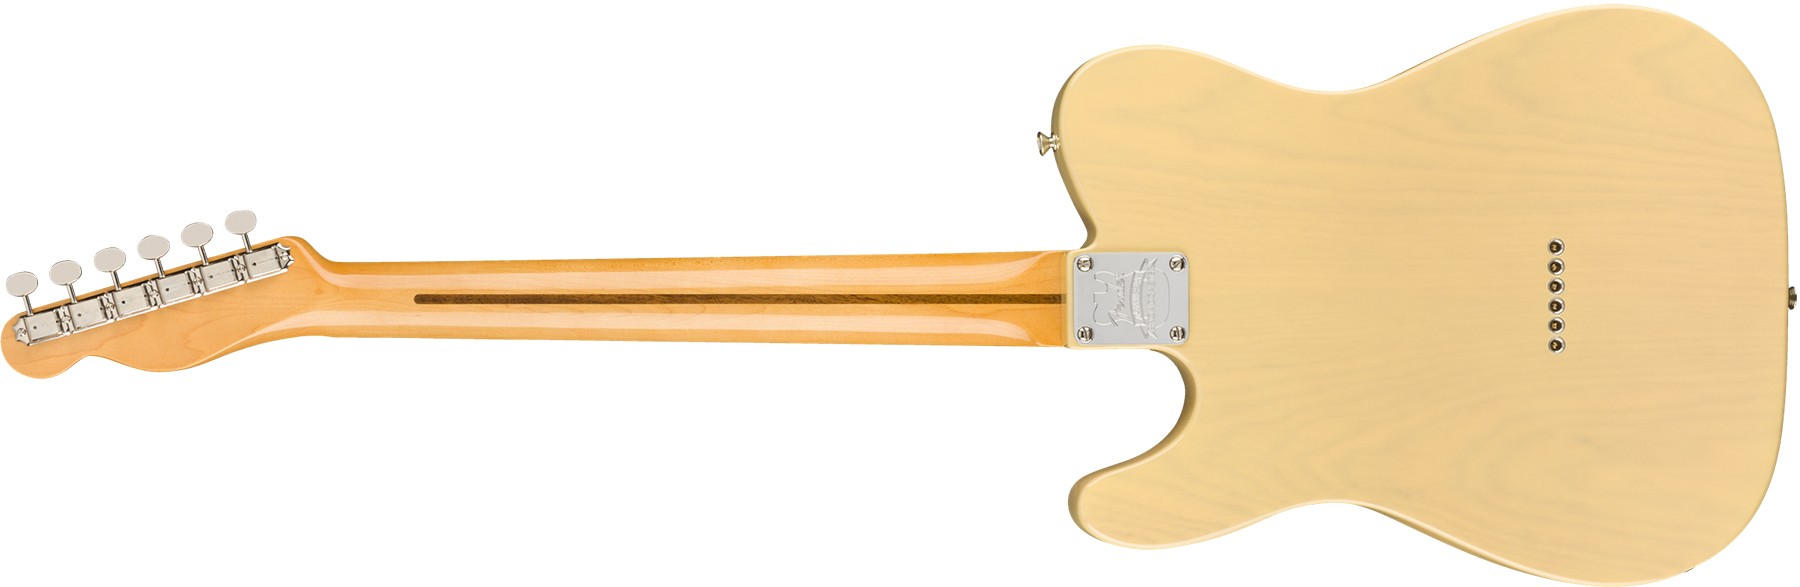 Fender Tele Broadcaster 70th Anniversary Usa Mn - Blackguard Blonde - Tel shape electric guitar - Variation 1